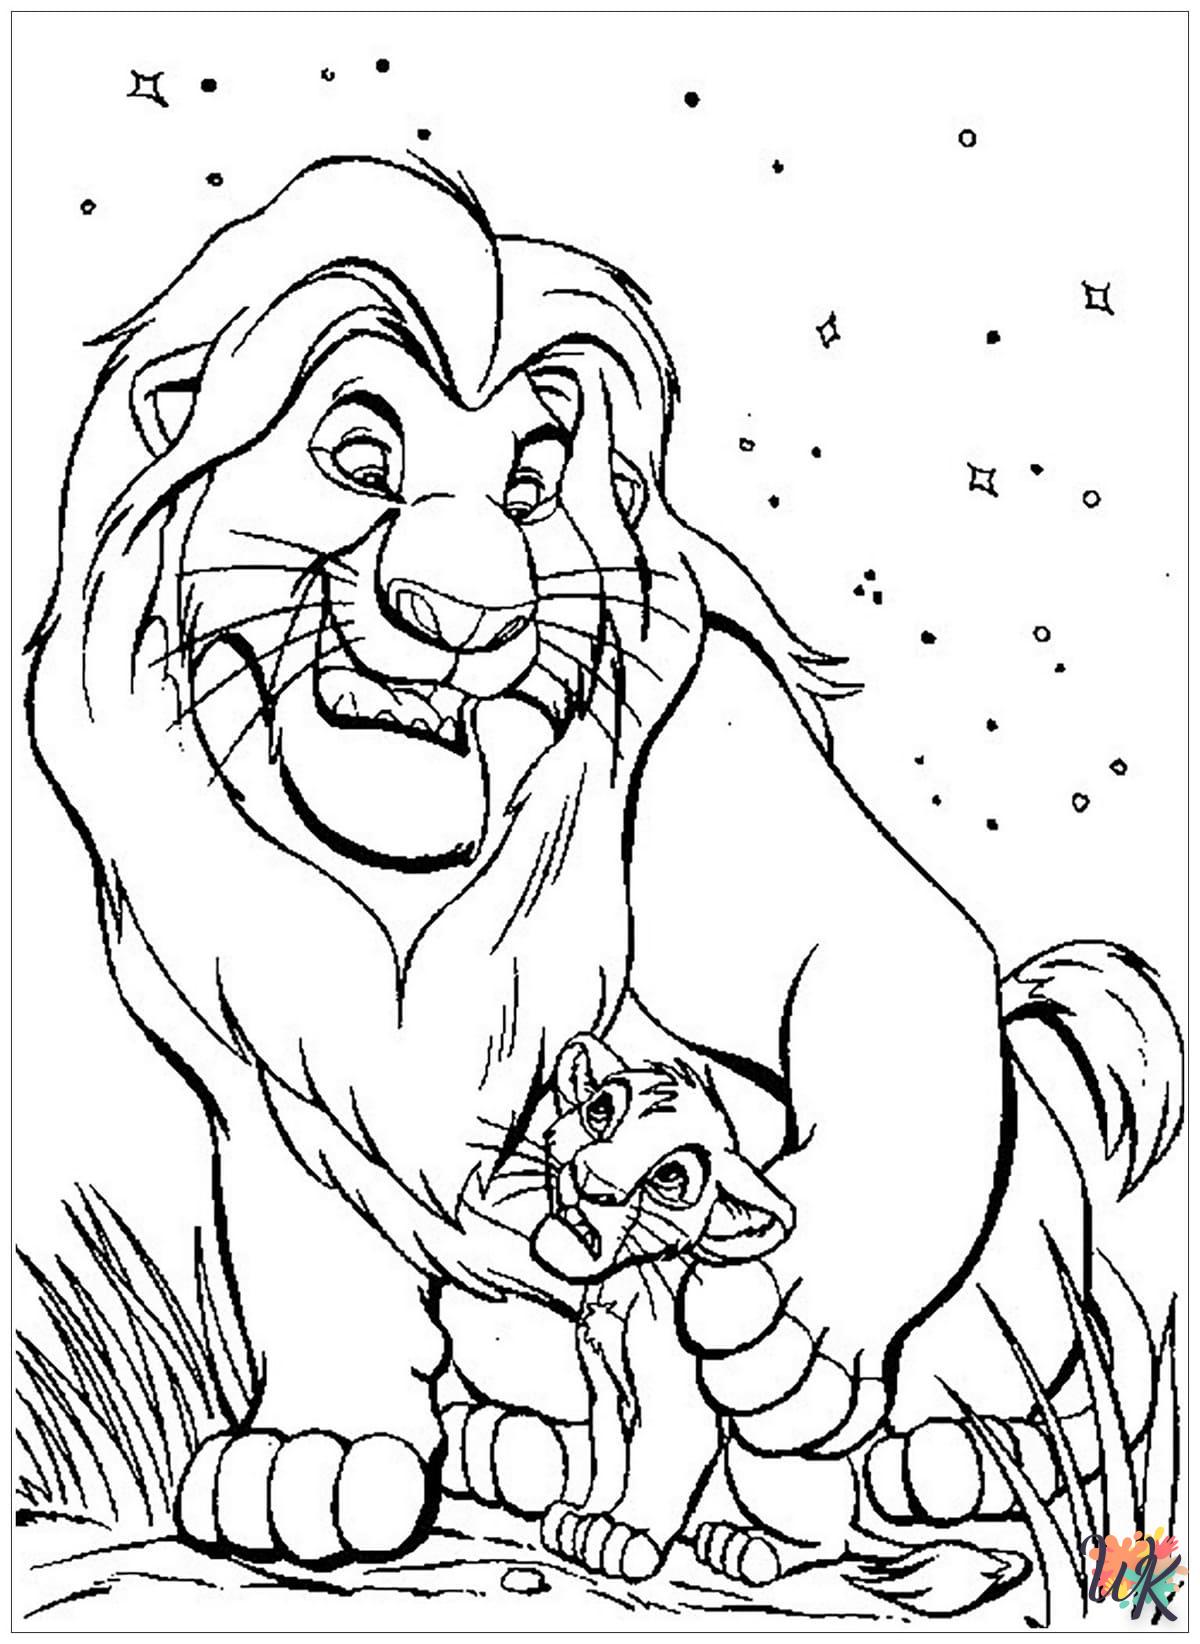 The Lion King kleurplaten17